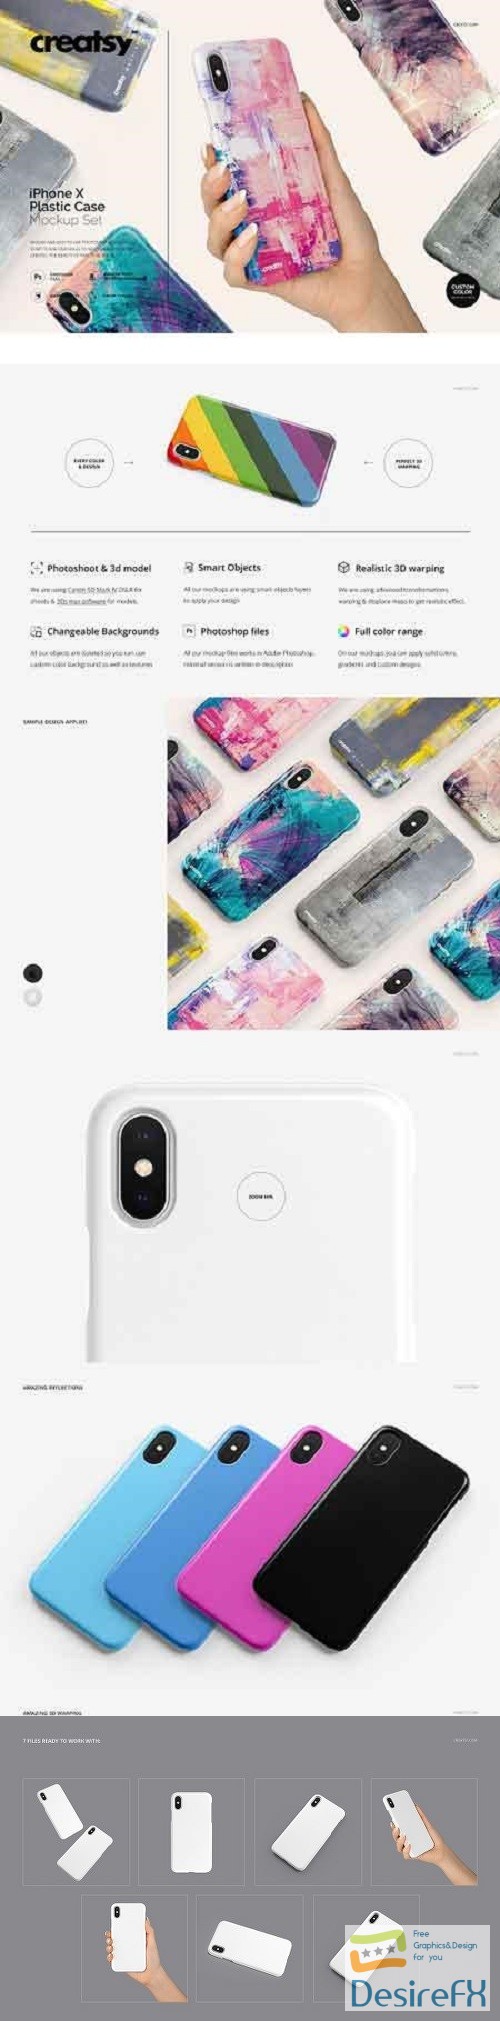 Download iPhone X Plastic Case Mockup Set 2115910 | DesireFX.COM